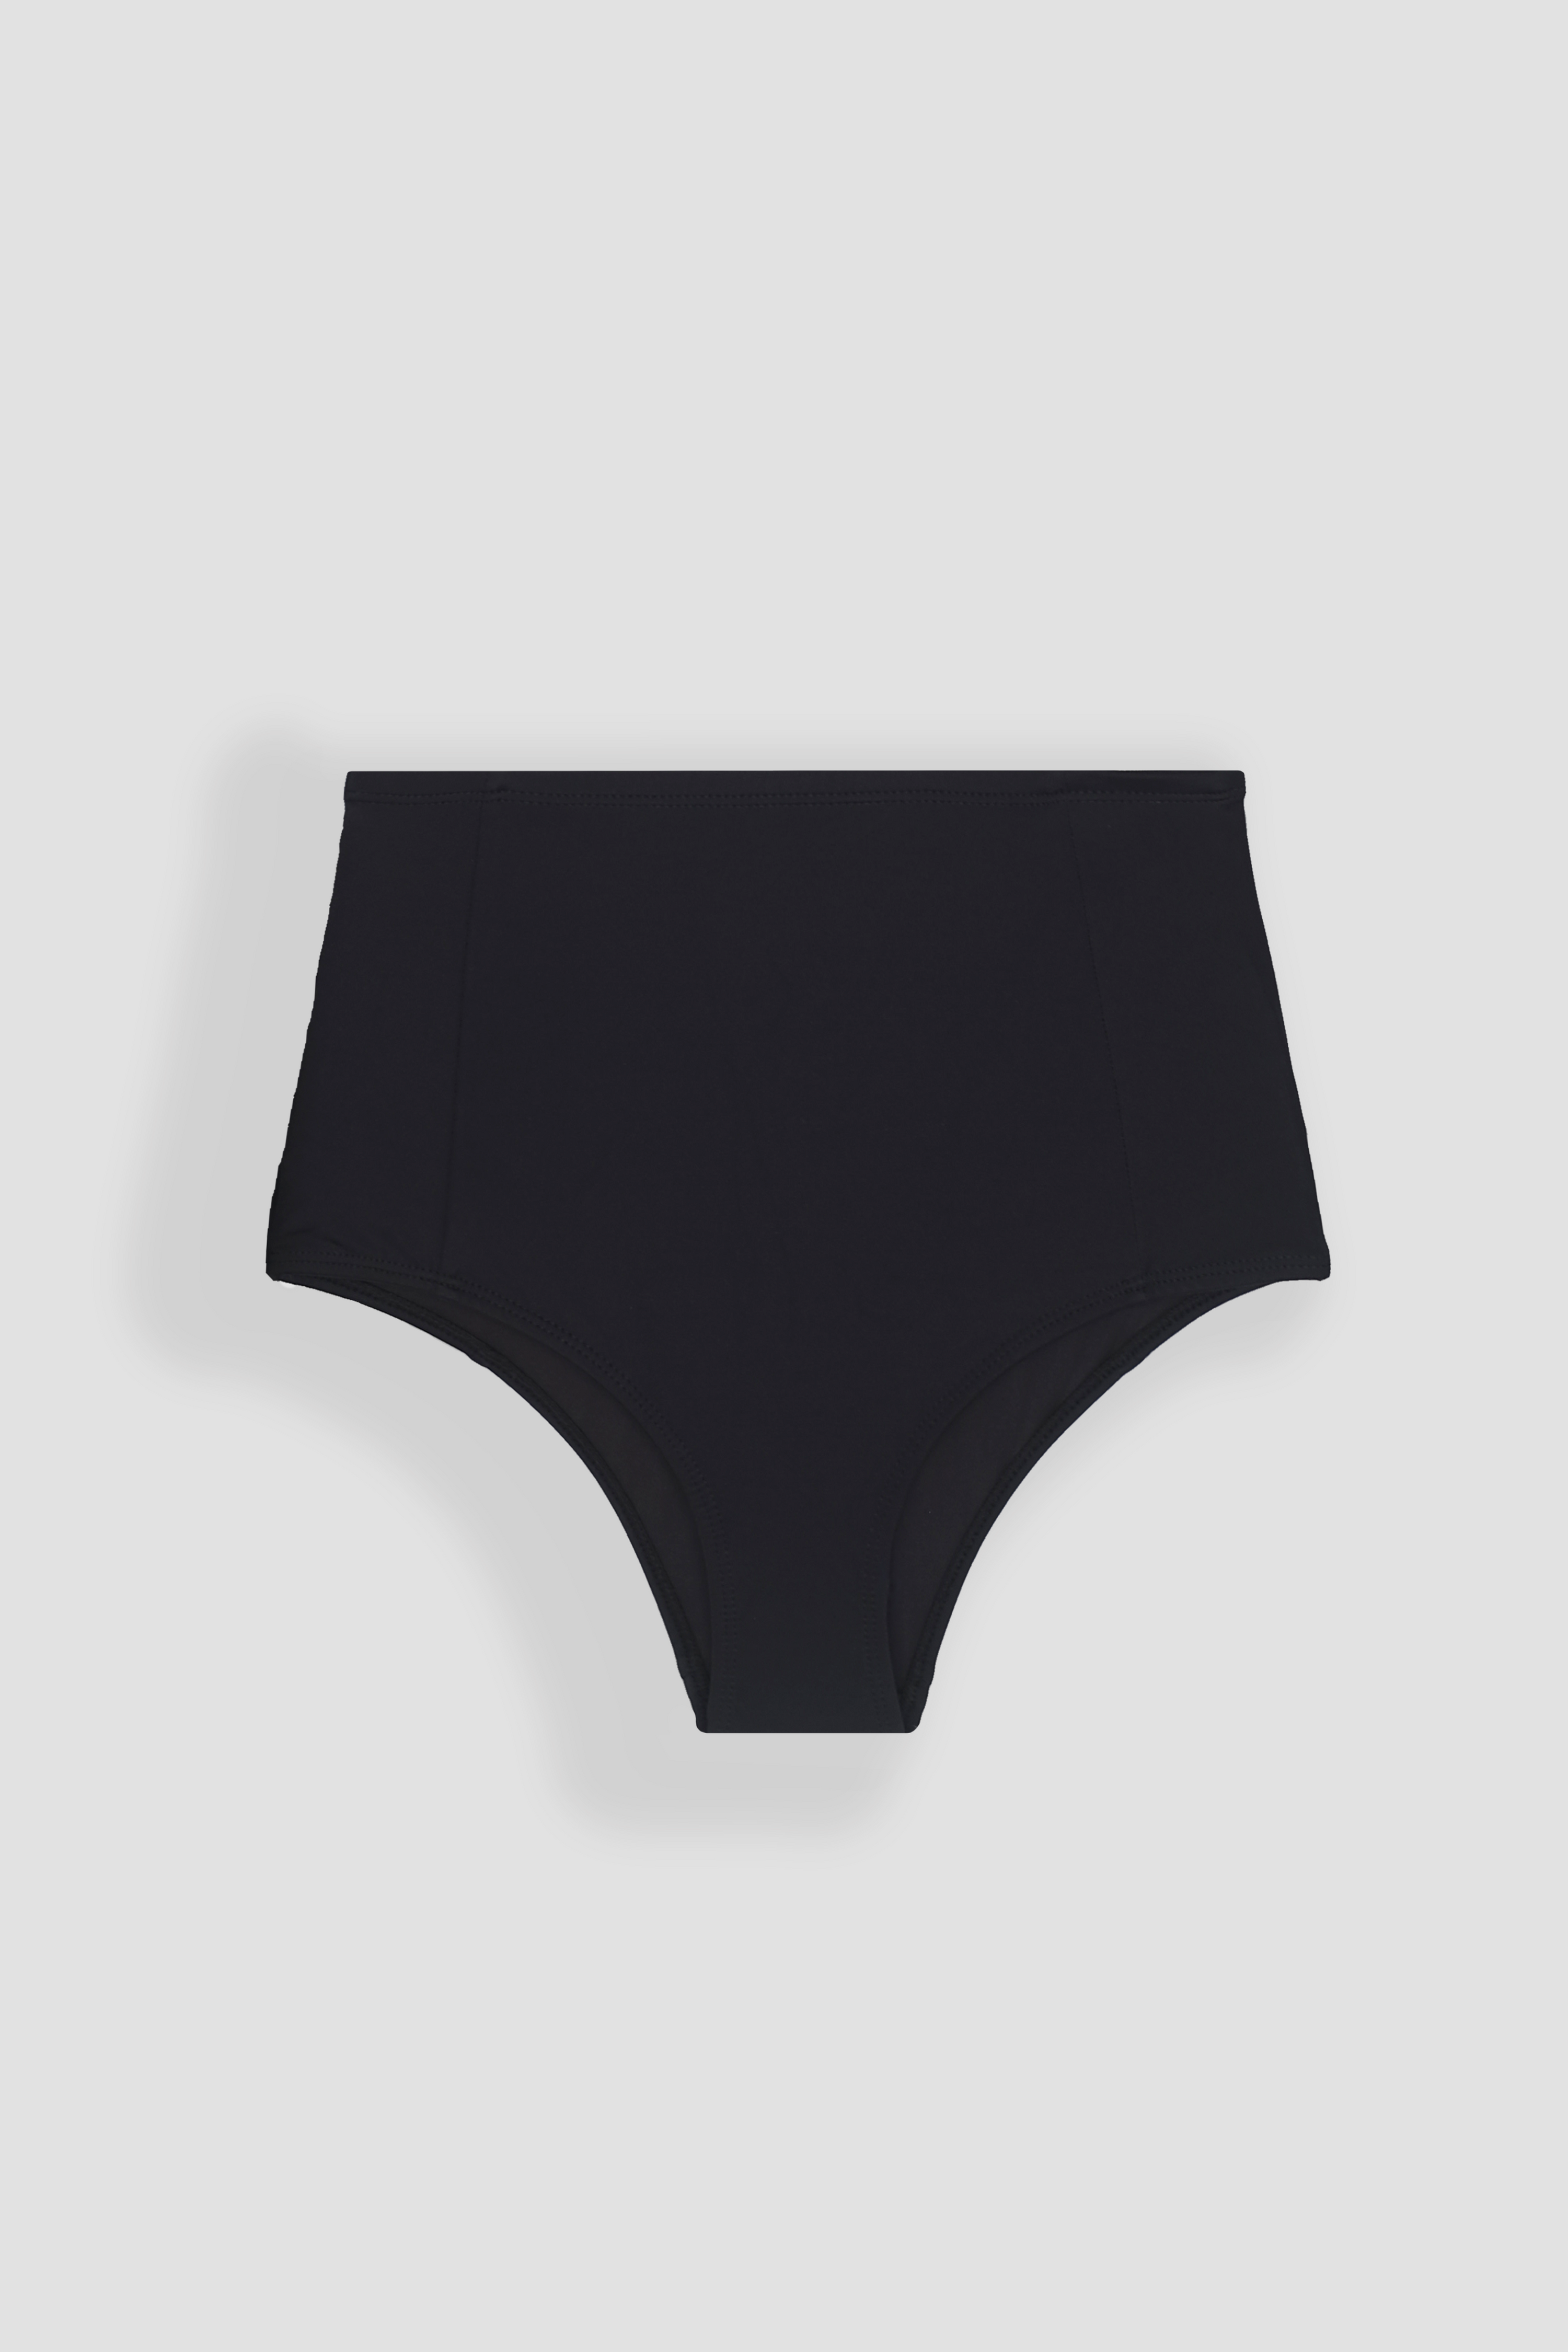 Ninefoot Studio Sanur Surf Bikini Bottom in Black | Bottoms